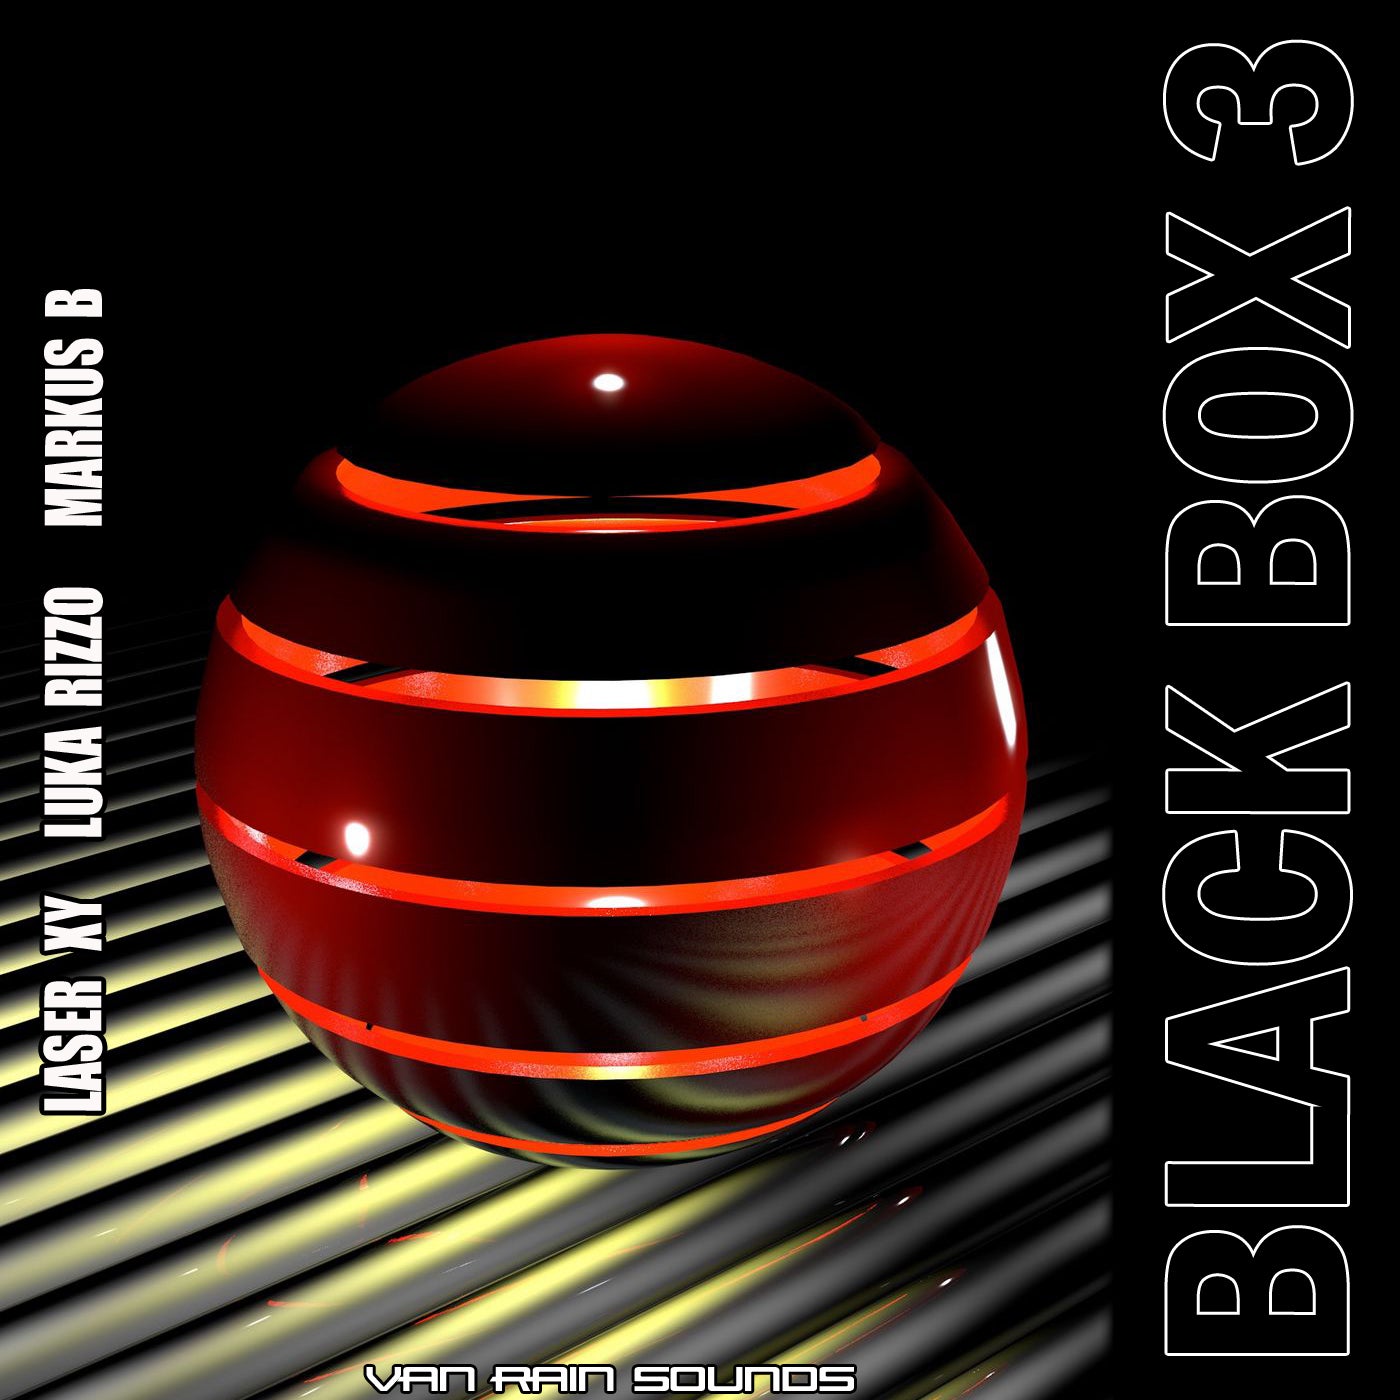 Black Box 3